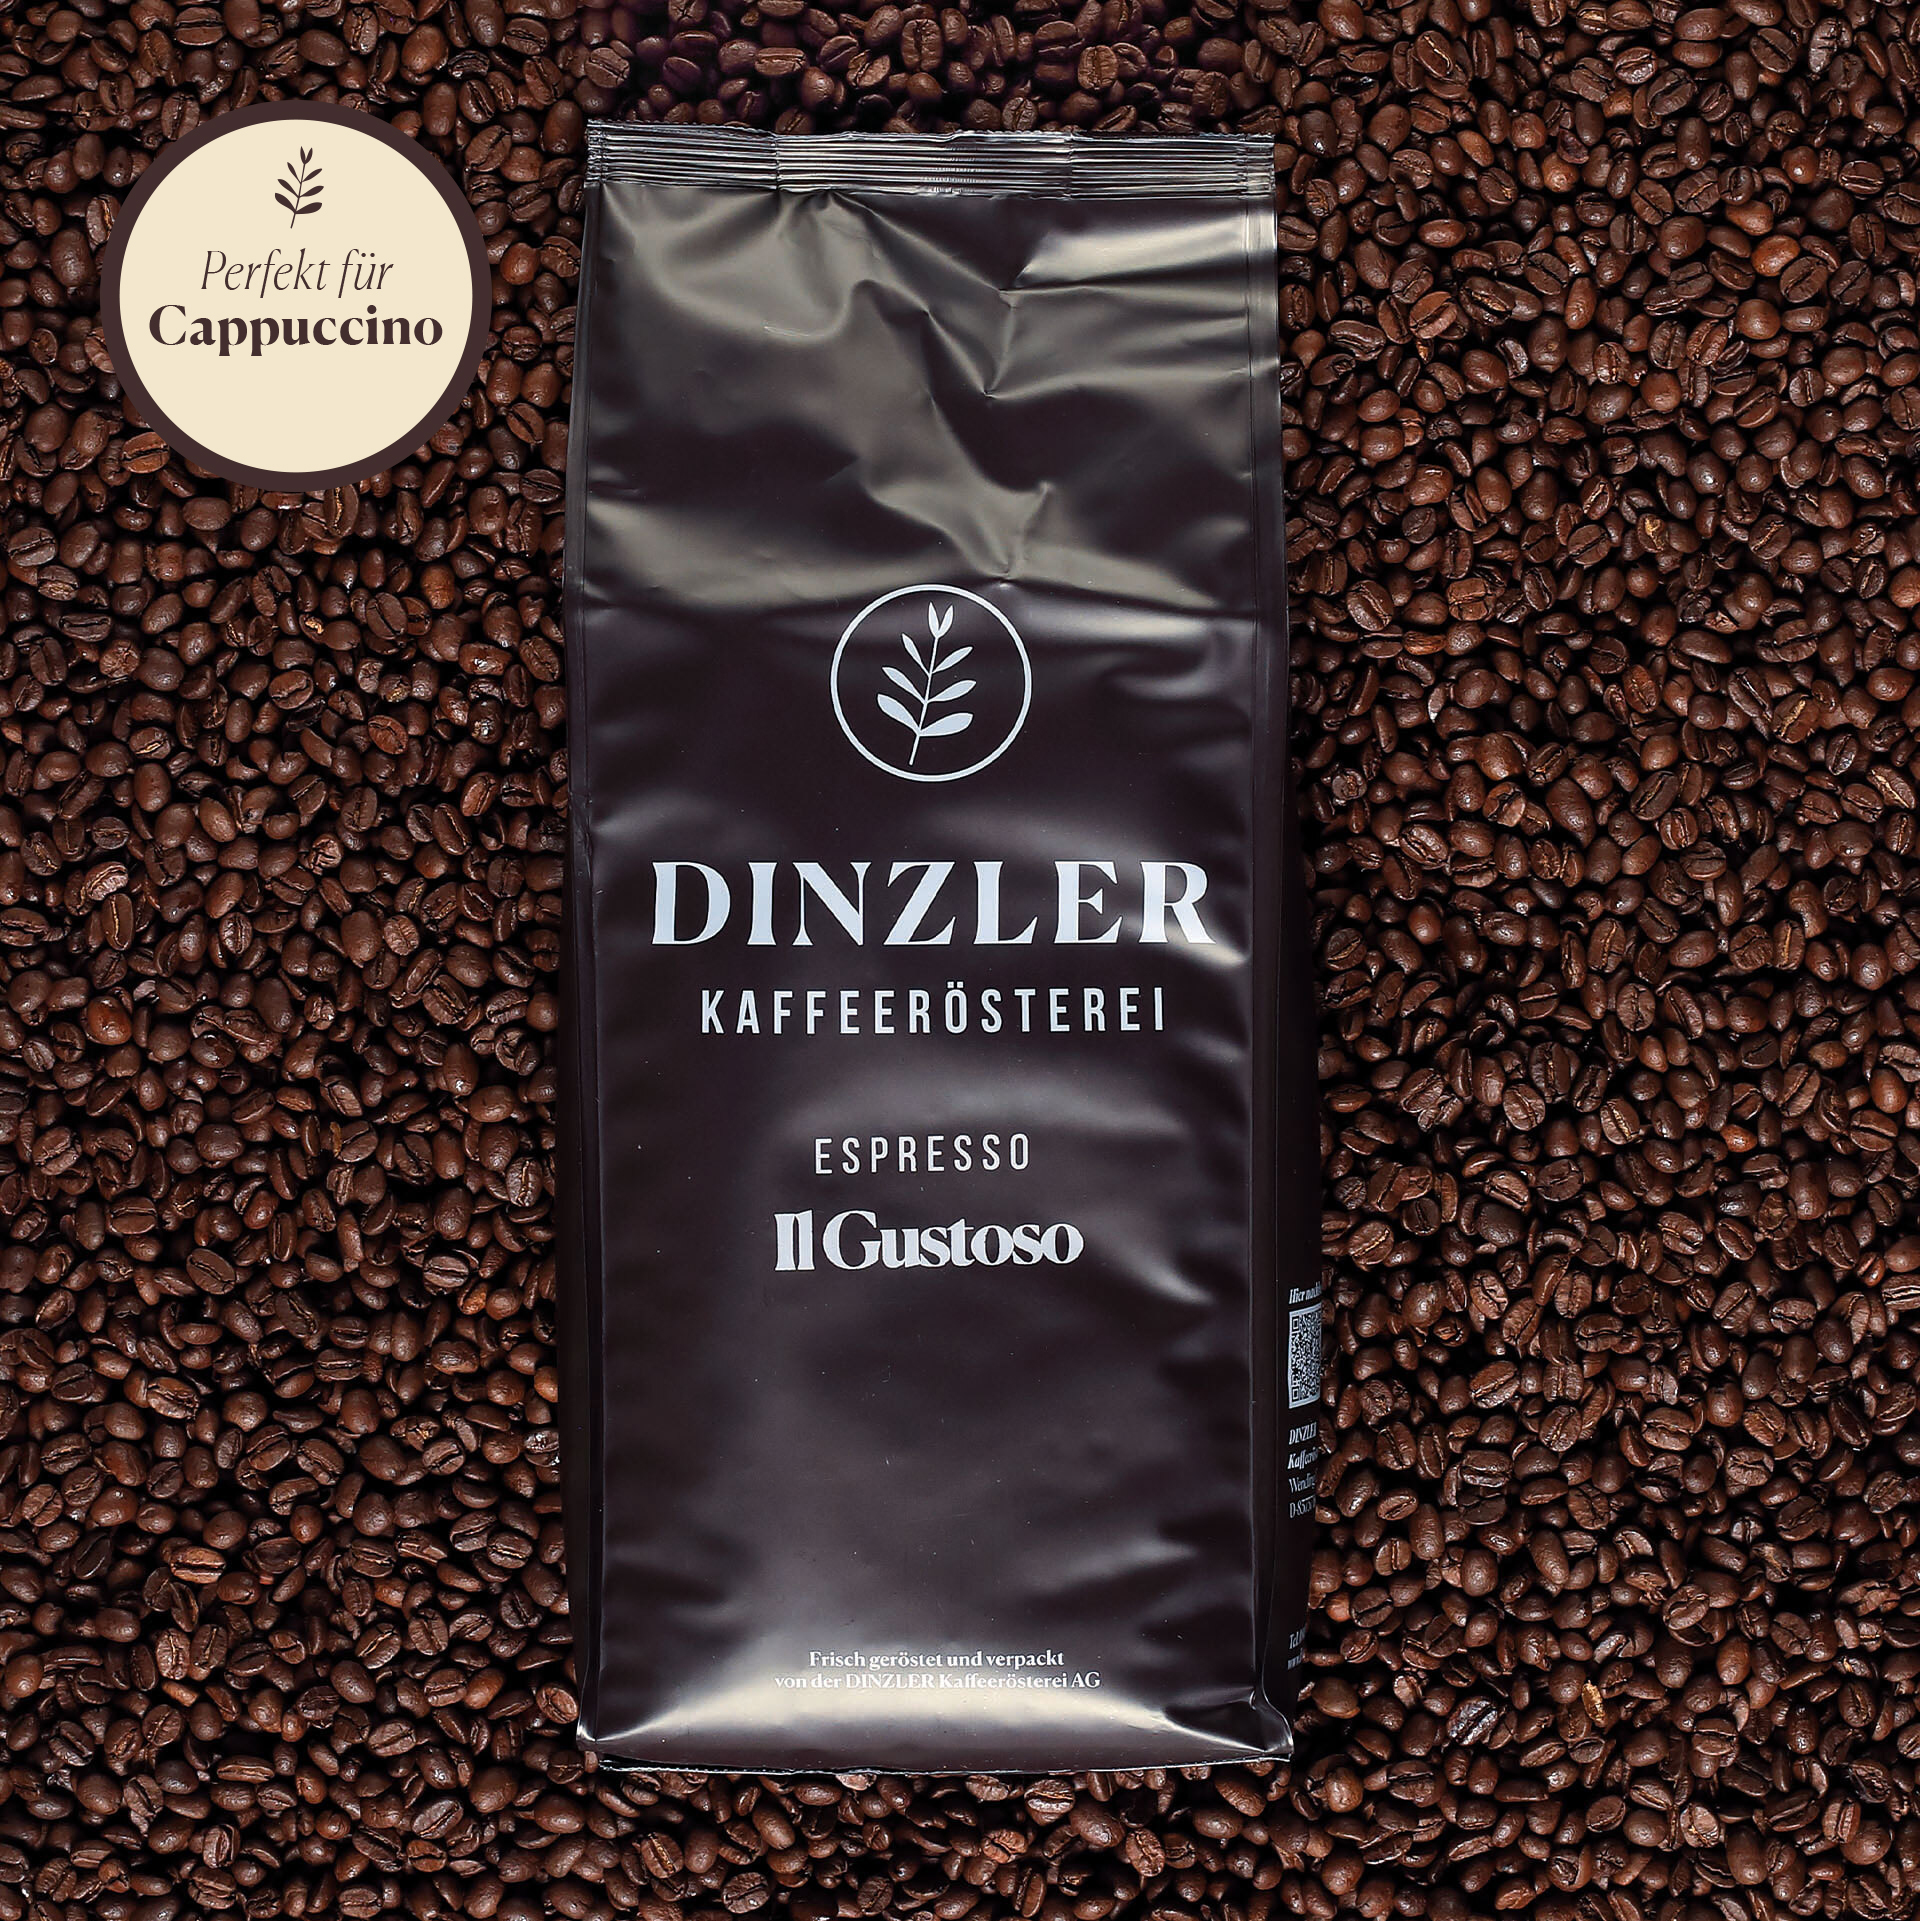 DINZLER Espresso IL Gustoso| DINZLER Kaffeerösterei